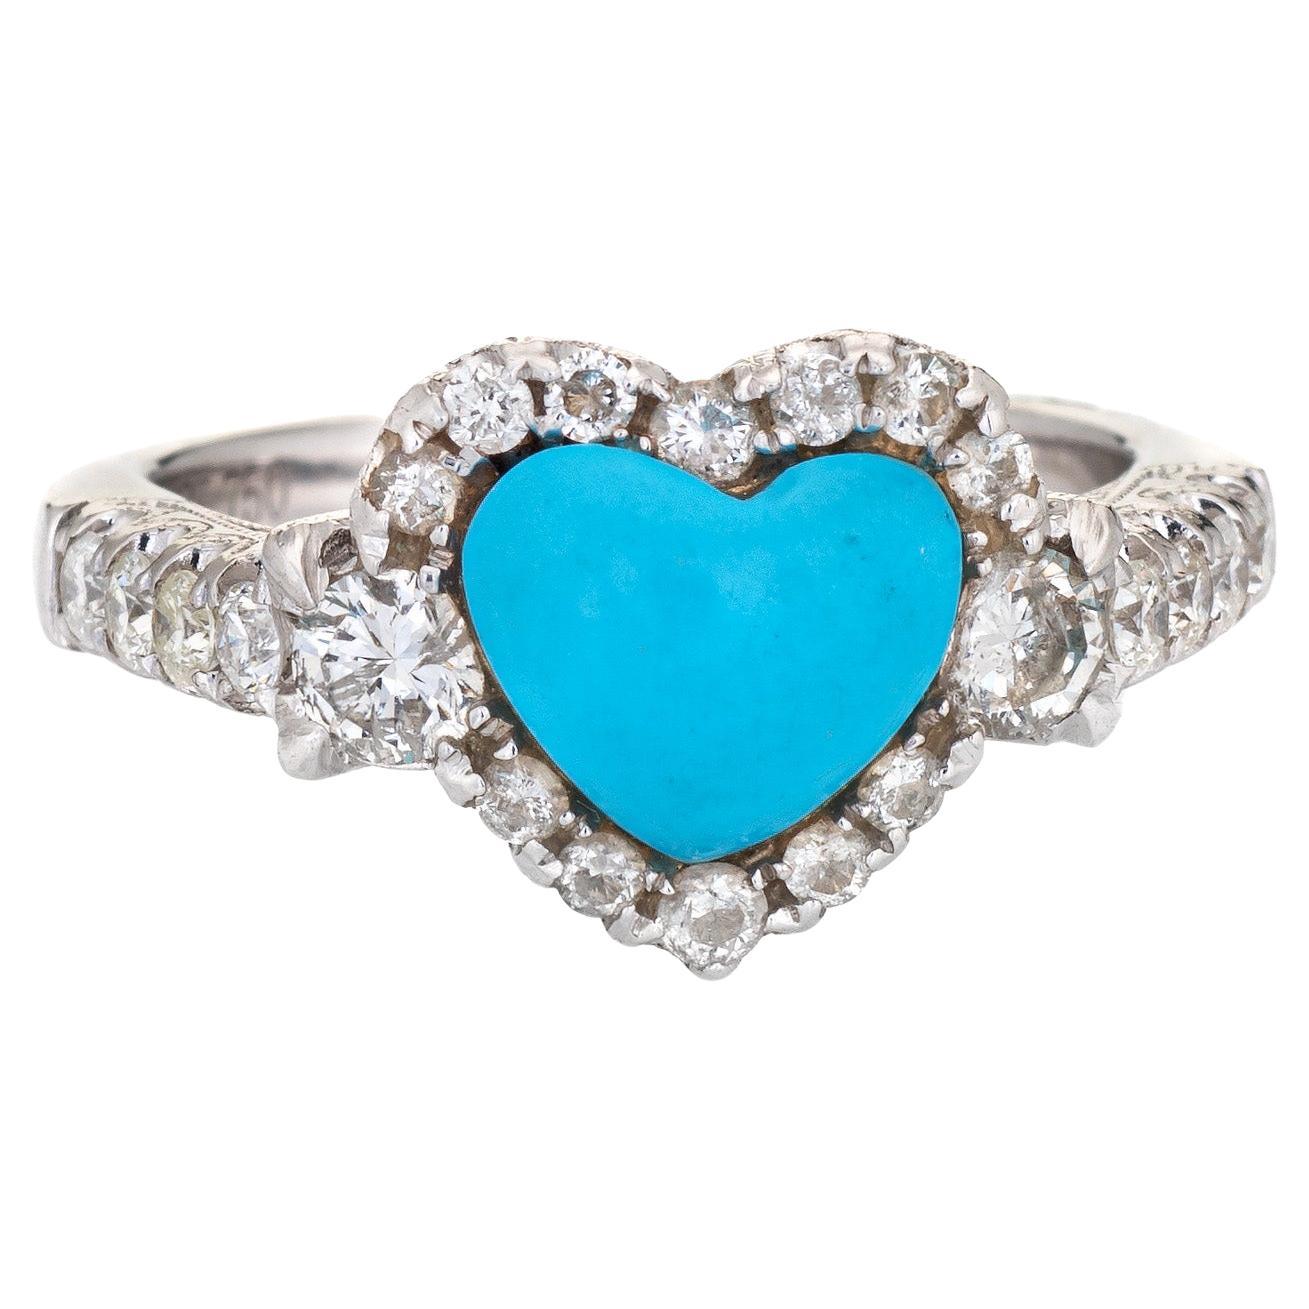 Turquoise Heart Ring 1ct Diamond Estate 18k White Gold Fine Love Jewelry